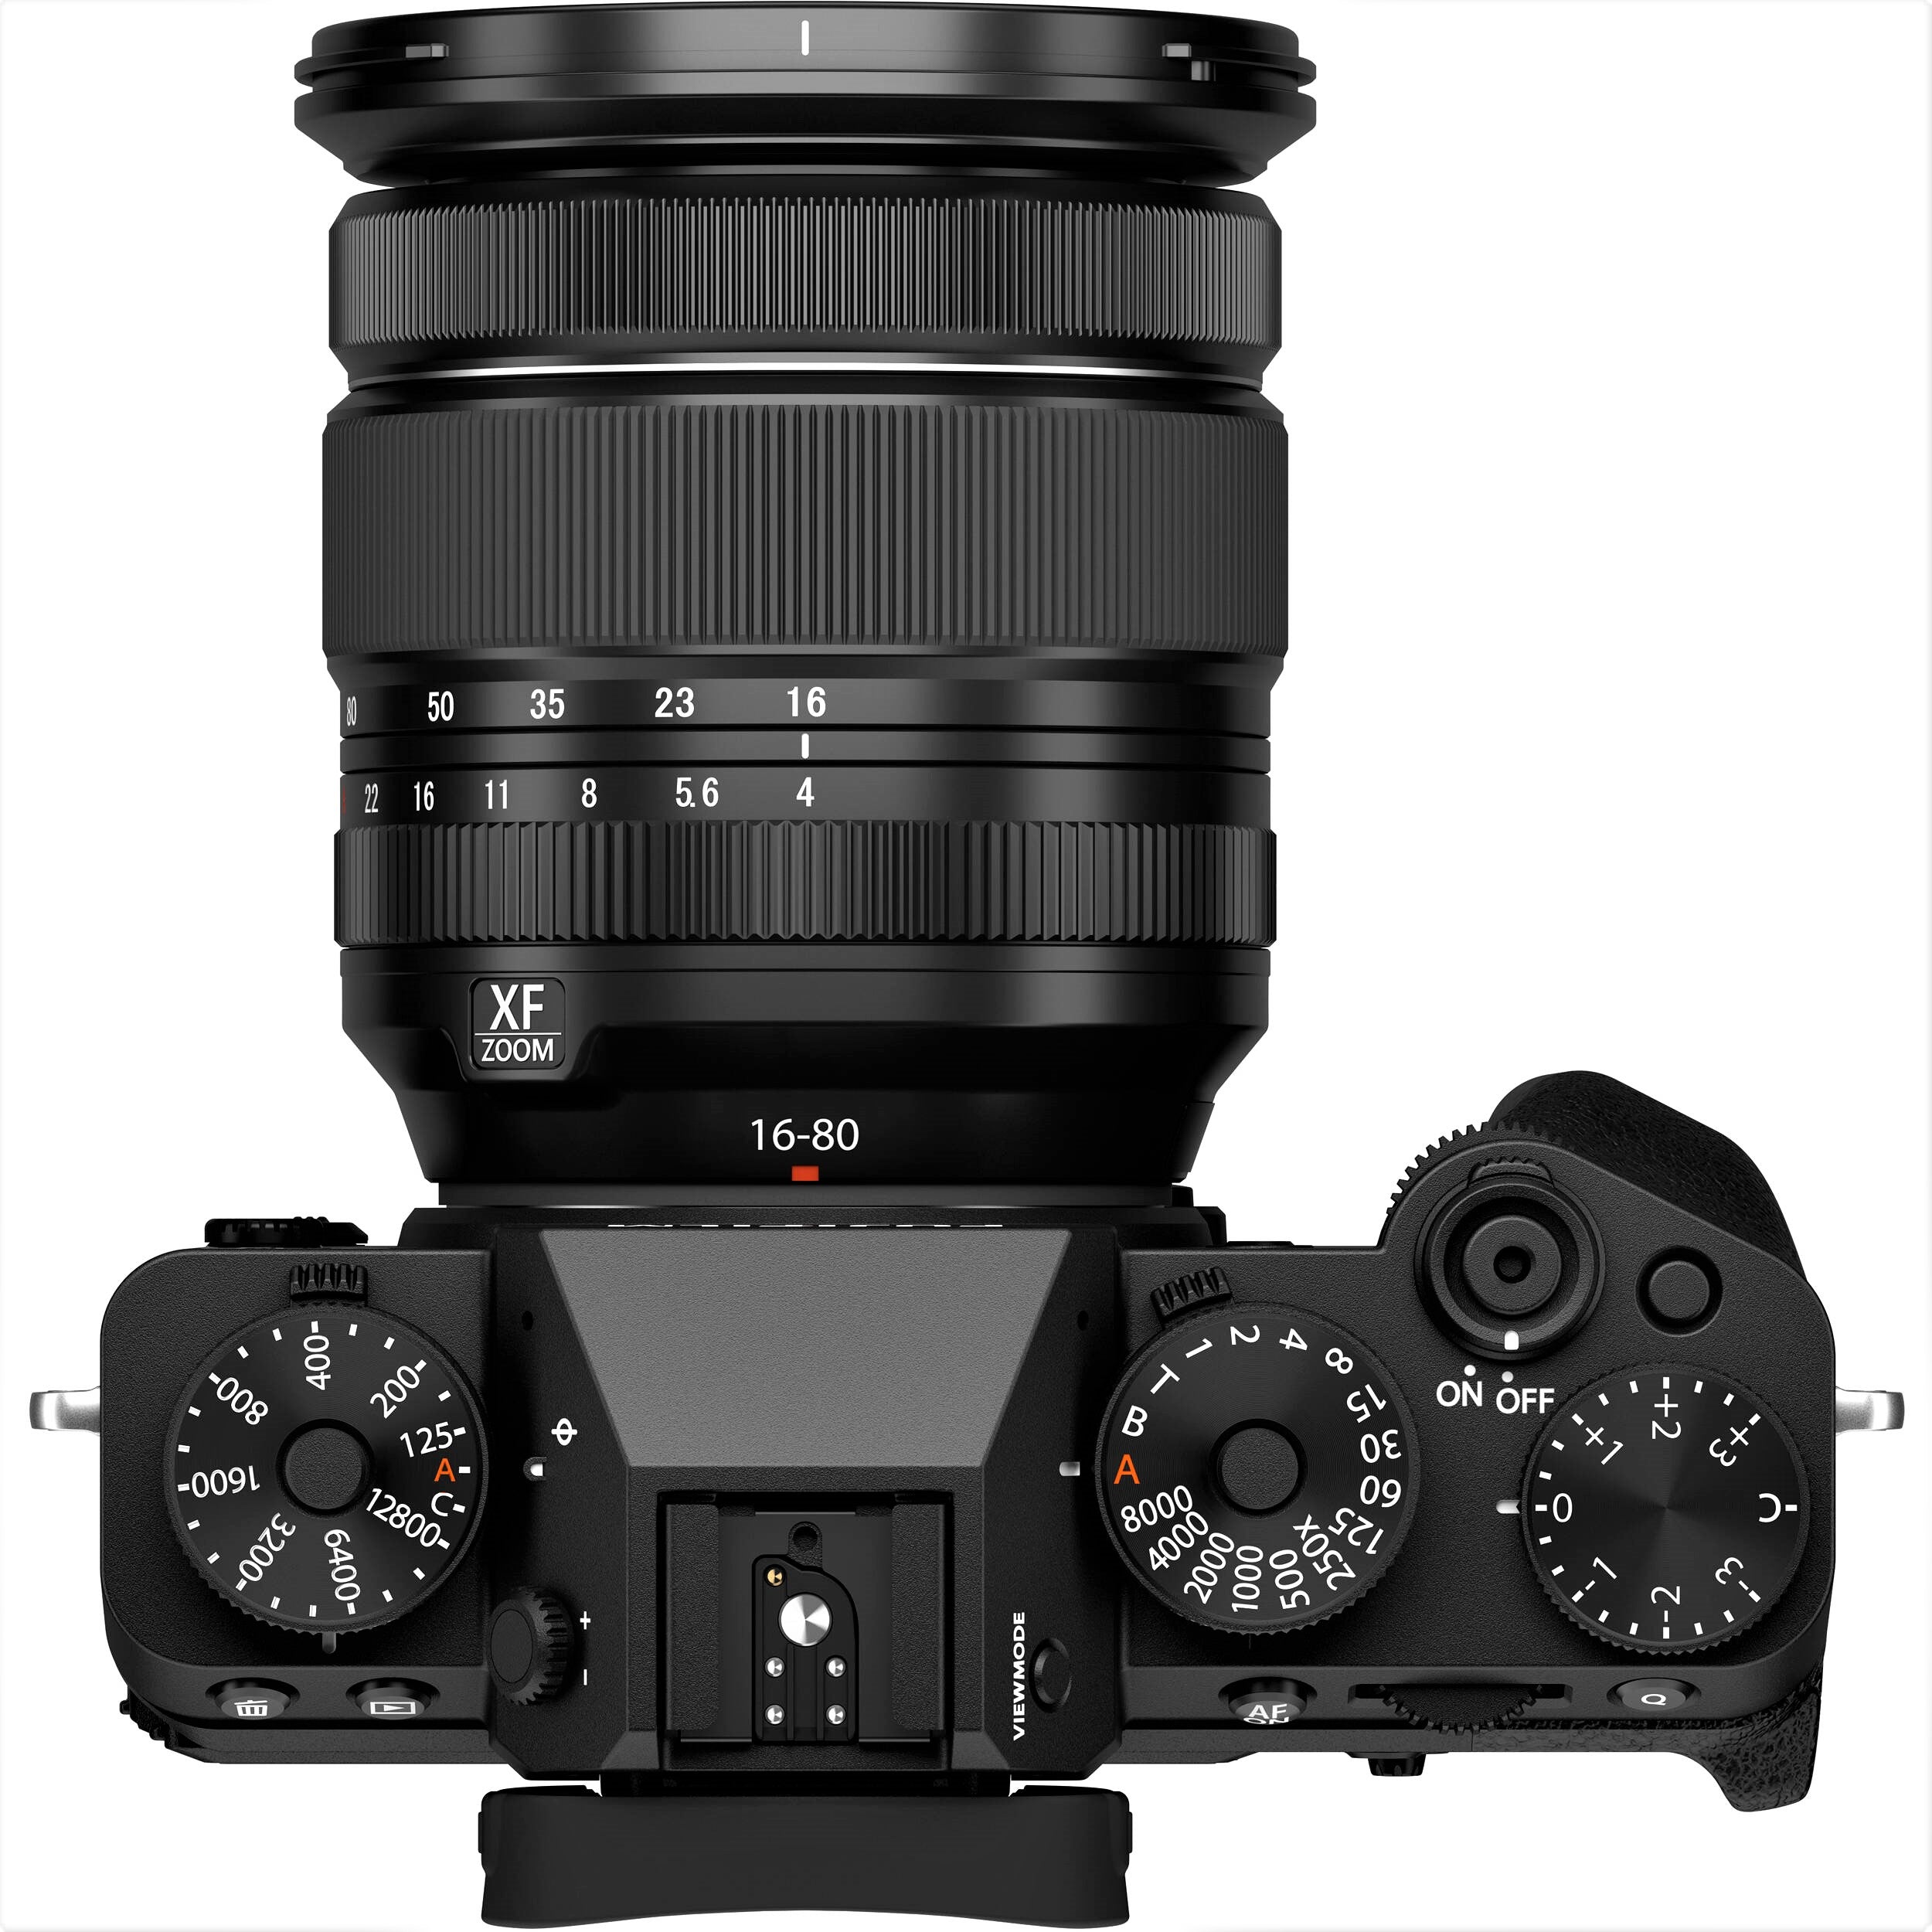 Fujifilm X-T5 Mirrorless Camera with 16-80mm Lens (Black) - Top View